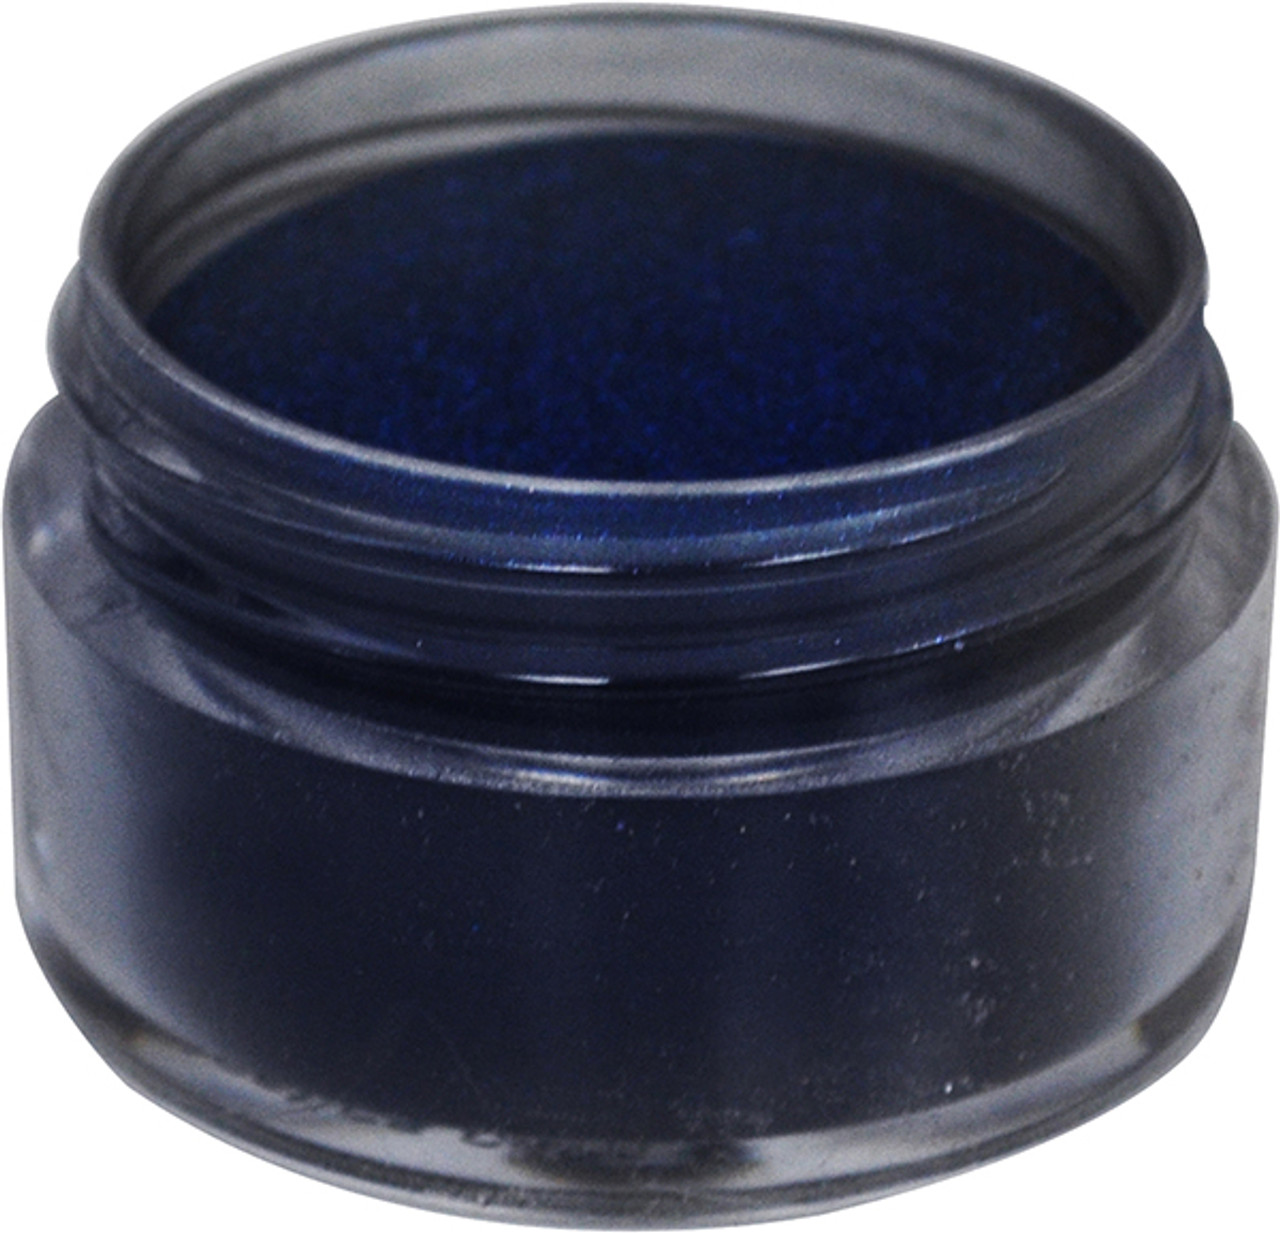 U2 Hollywood Gems Color Powders - Pin Pin Blue -  1/2 oz